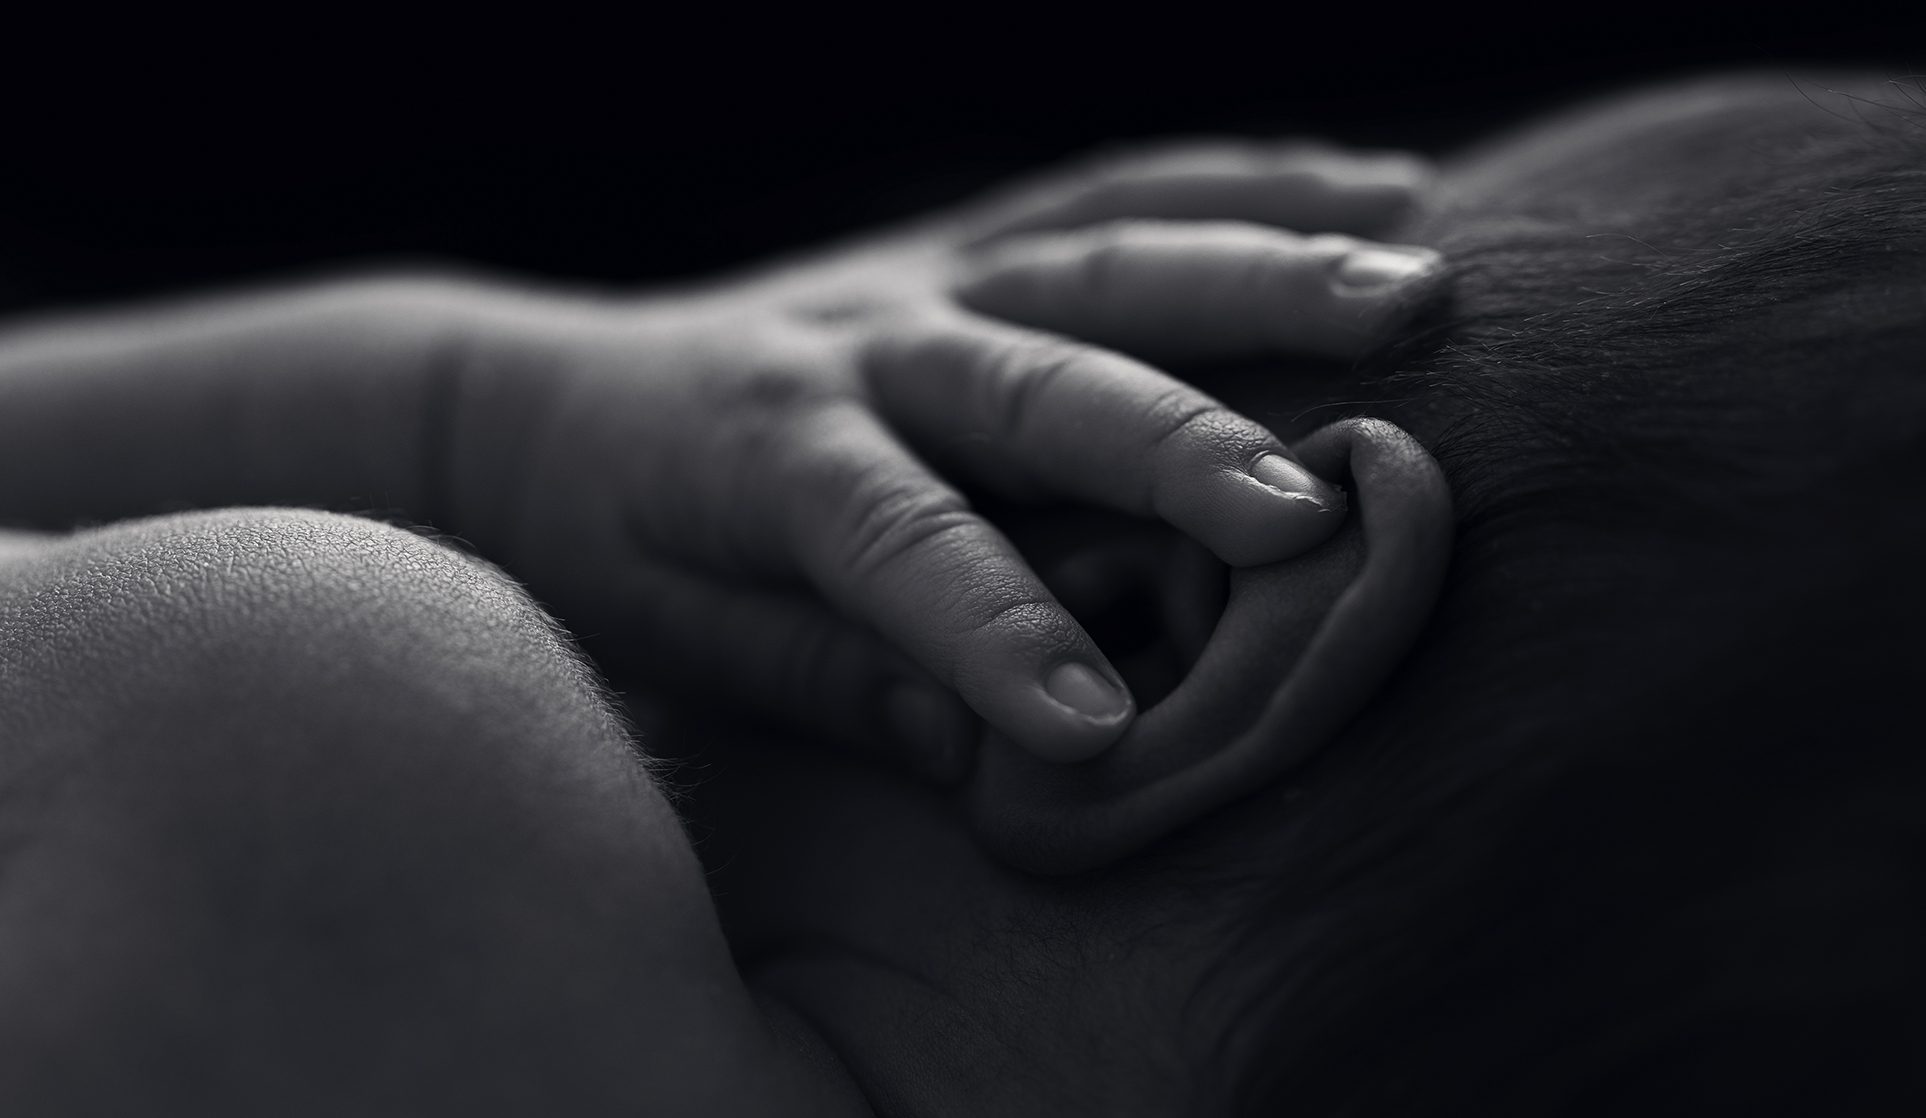 macro detail newborn skin peach fuzz and hand by burlington newborn photographer hope and salt